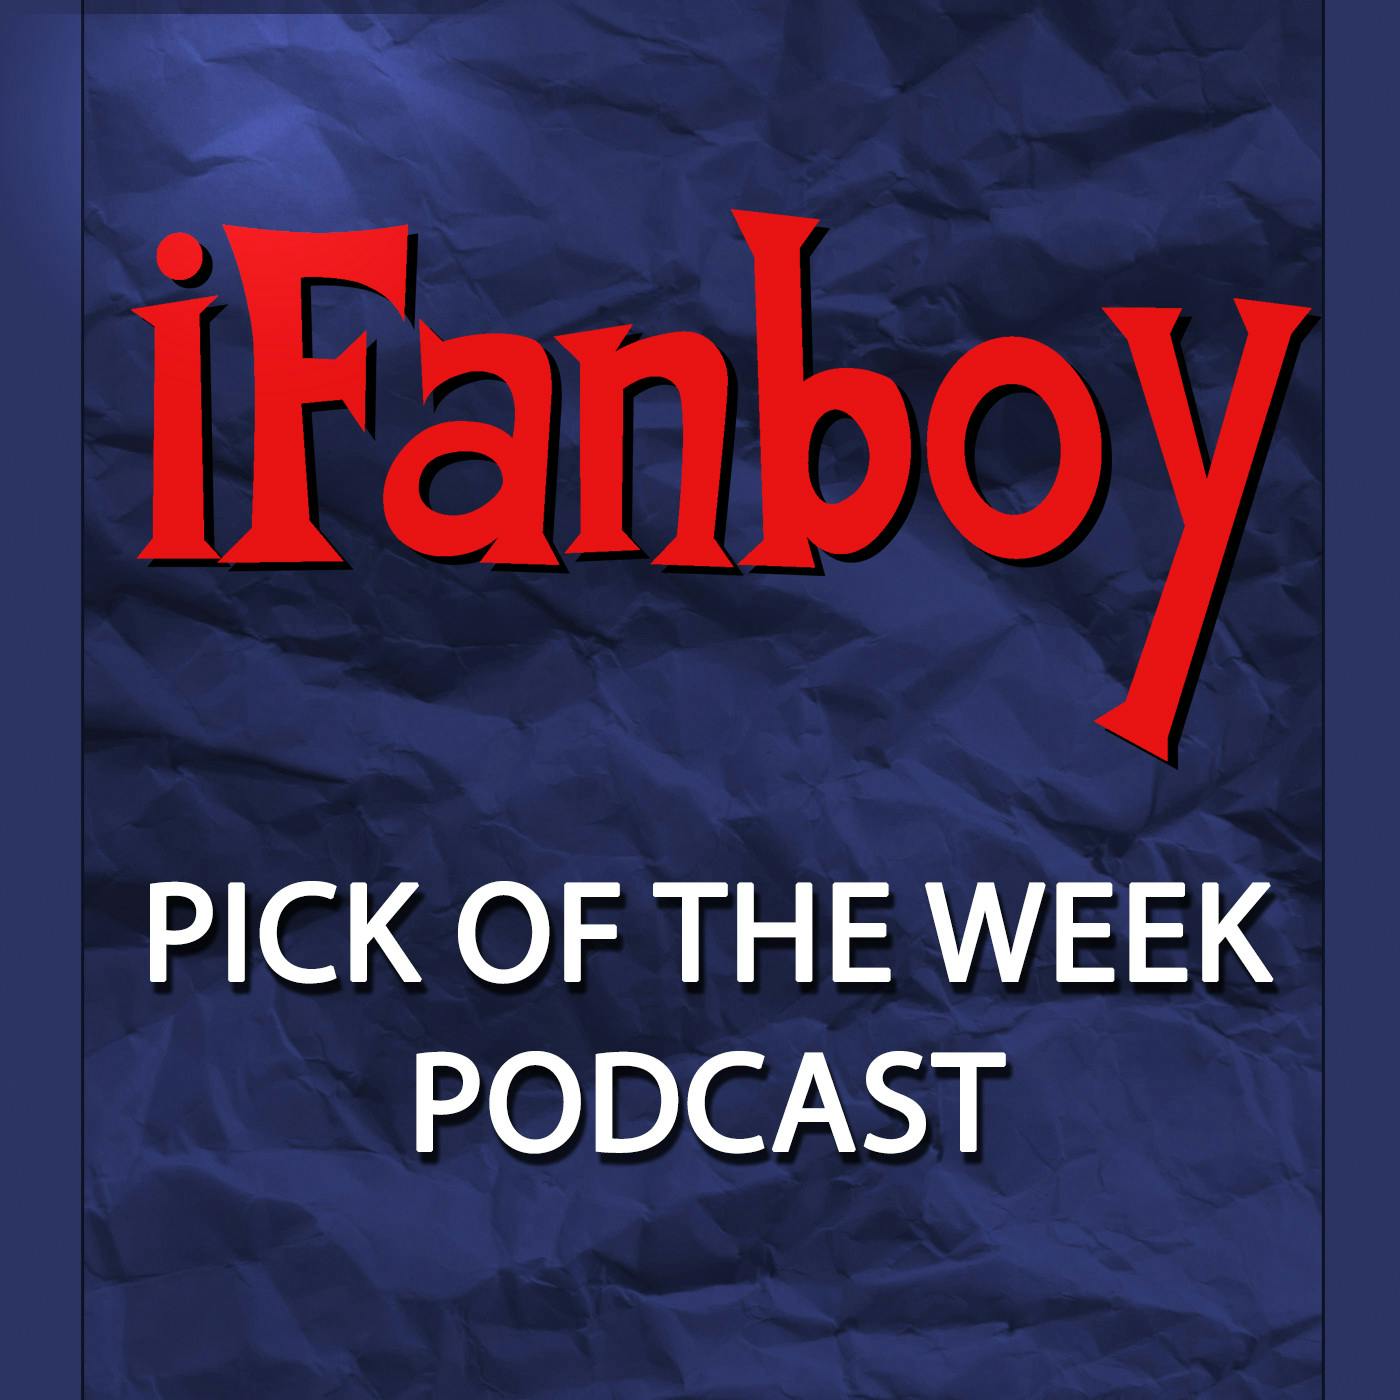 Pick of the Week #845 - Amazing Fantasy #1000